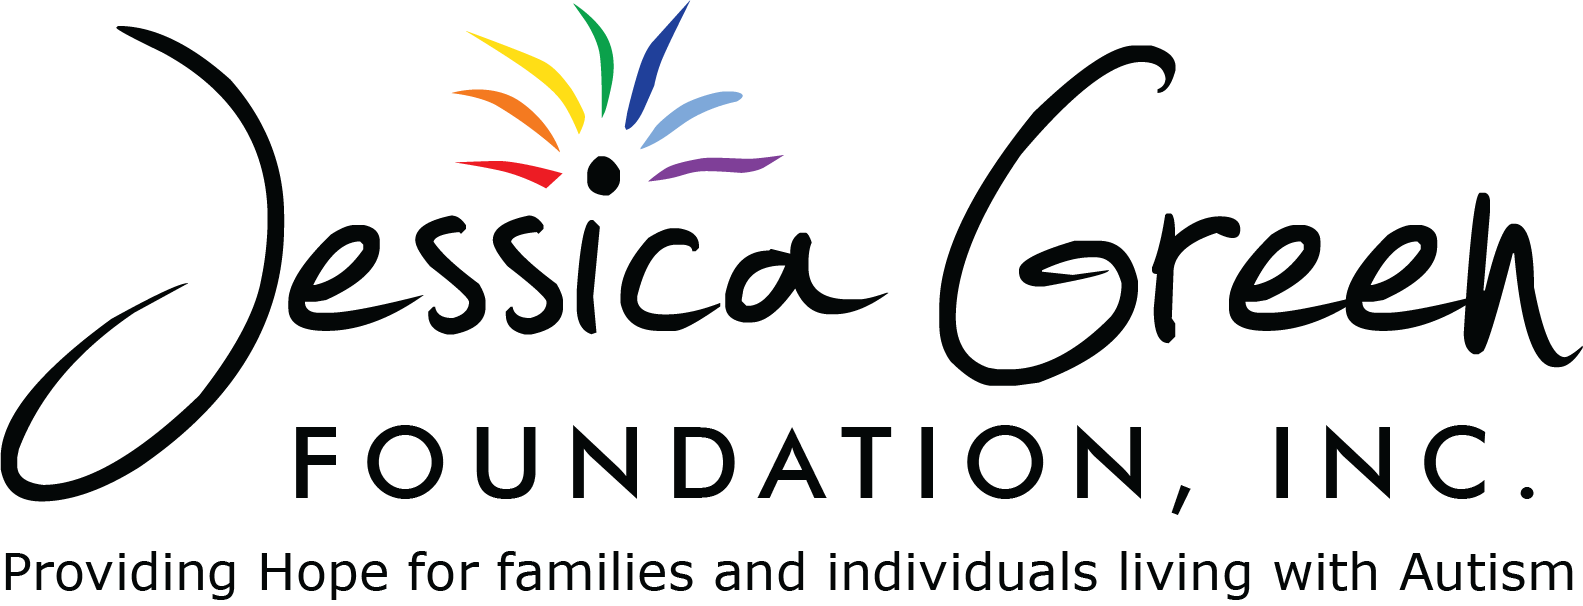 Jessica Green Foundation Logo